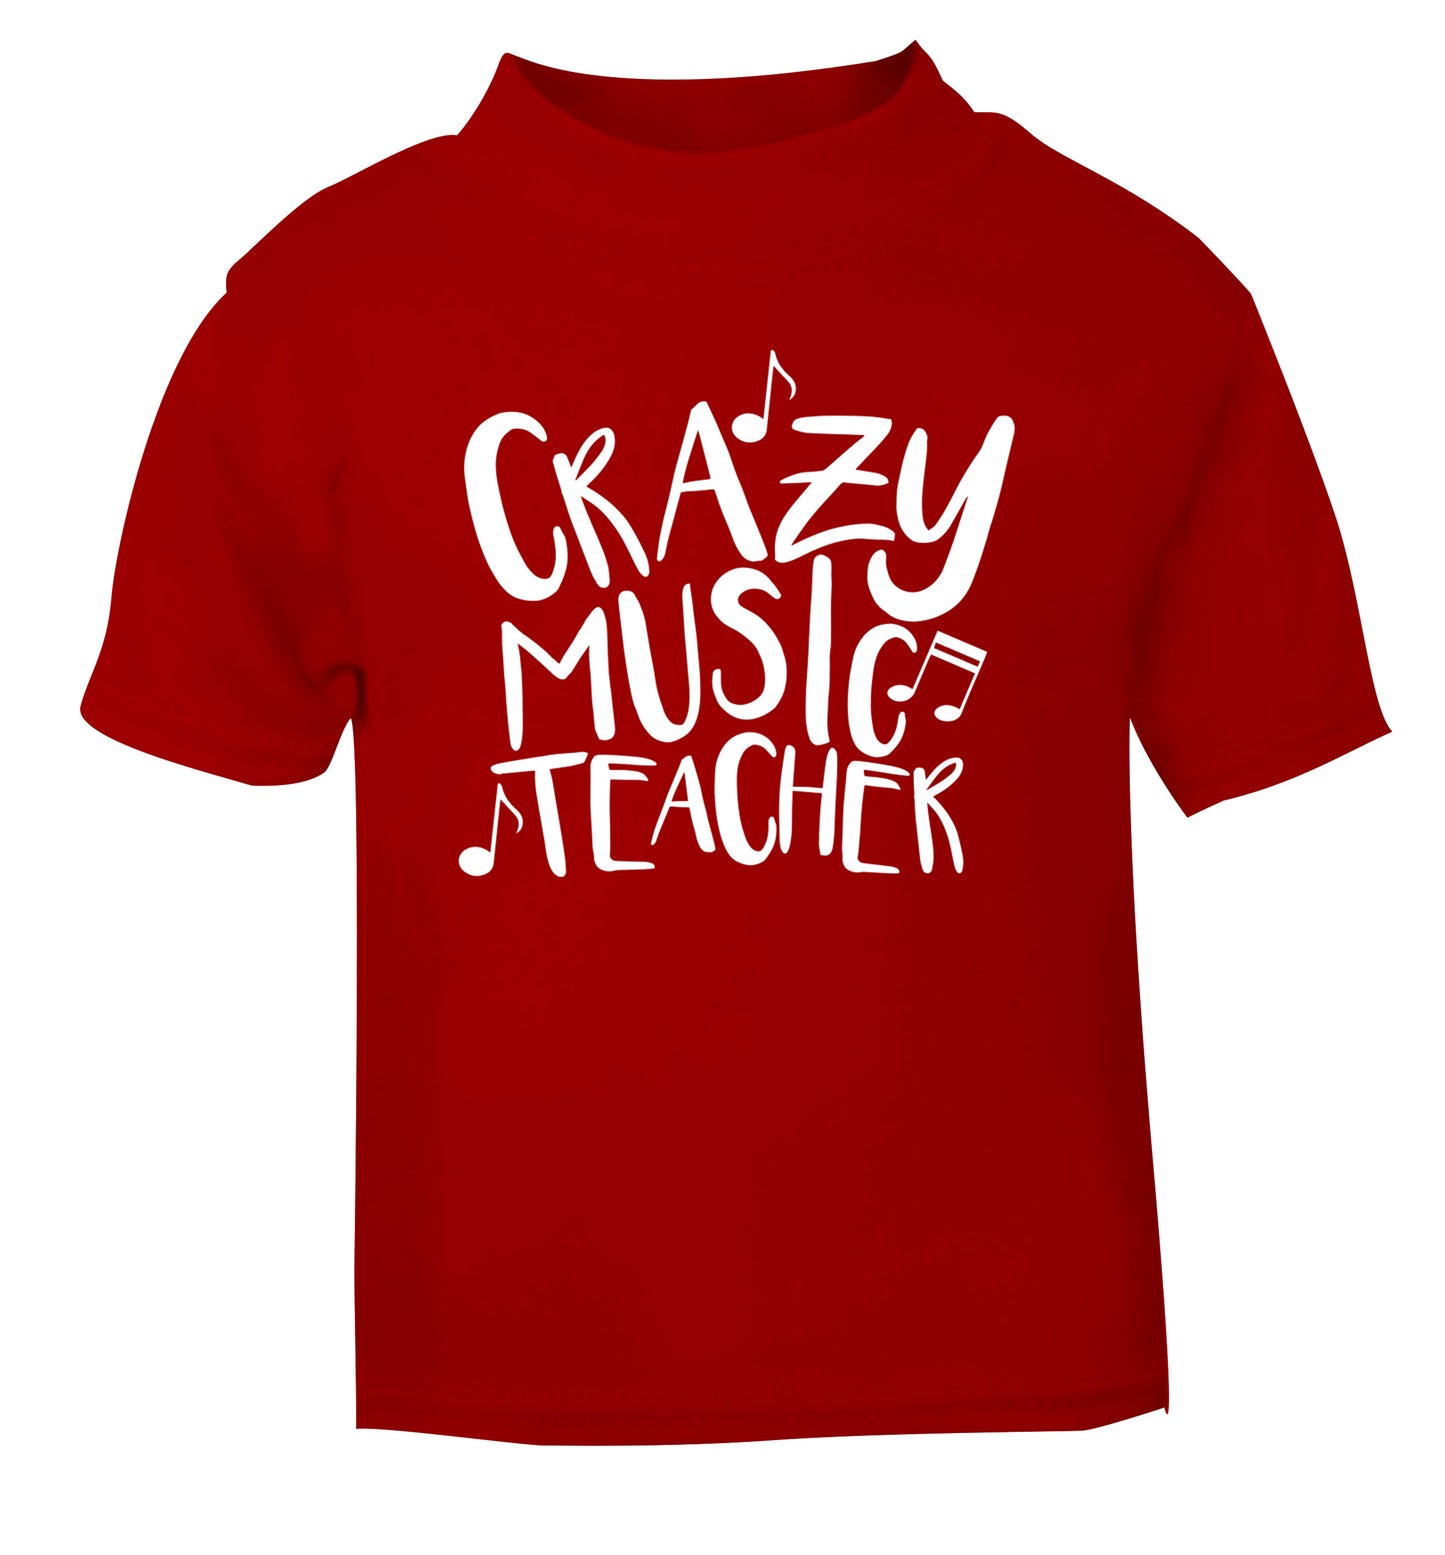 Crazy music teacher red Baby Toddler Tshirt 2 Years